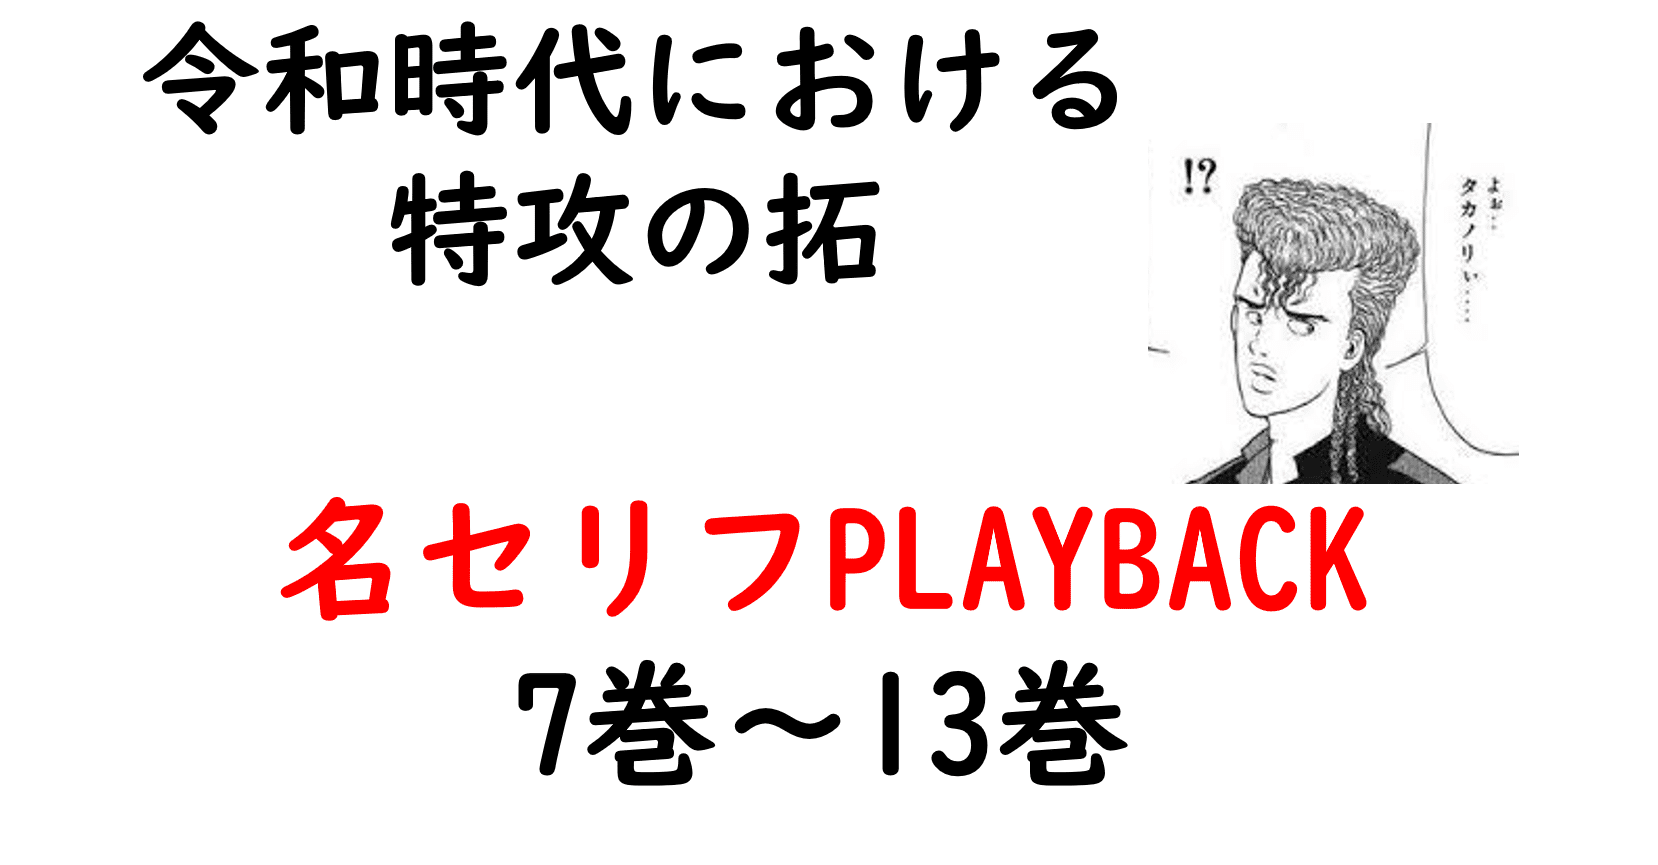 特攻の拓 名言playback 7巻 13巻 Bukkomiyamada Note